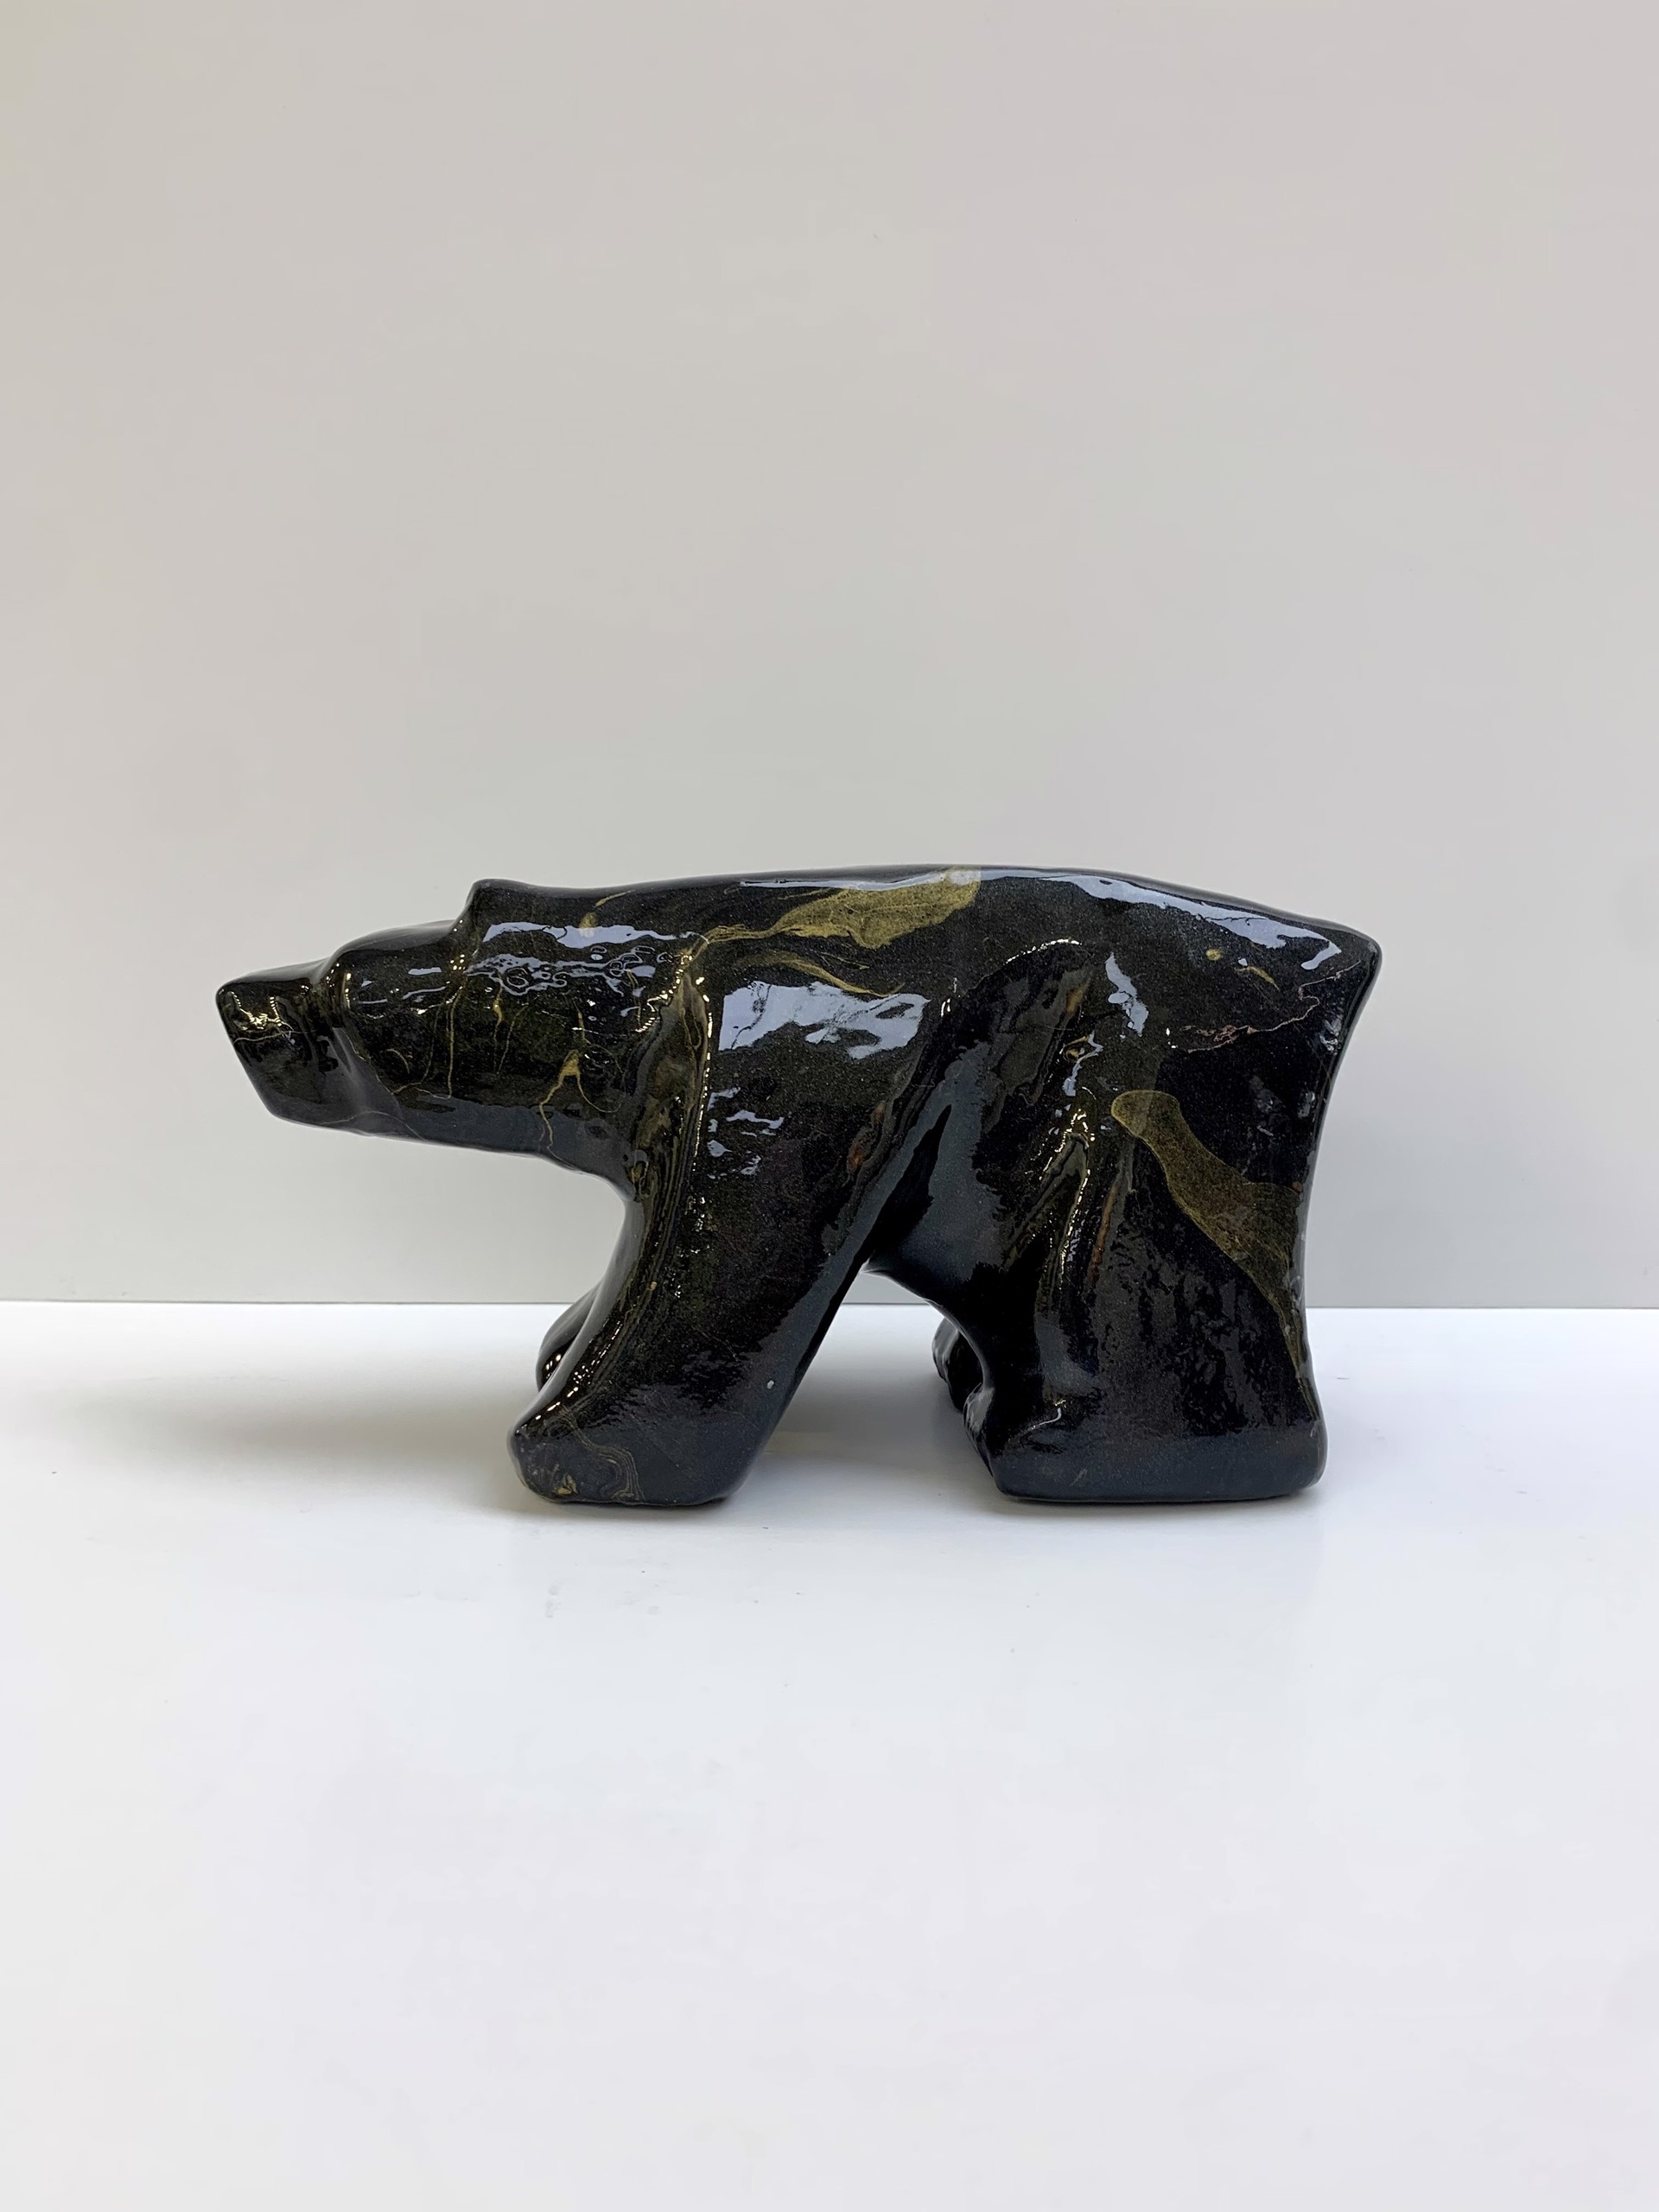 Walking Black Bear by Allan Waidman